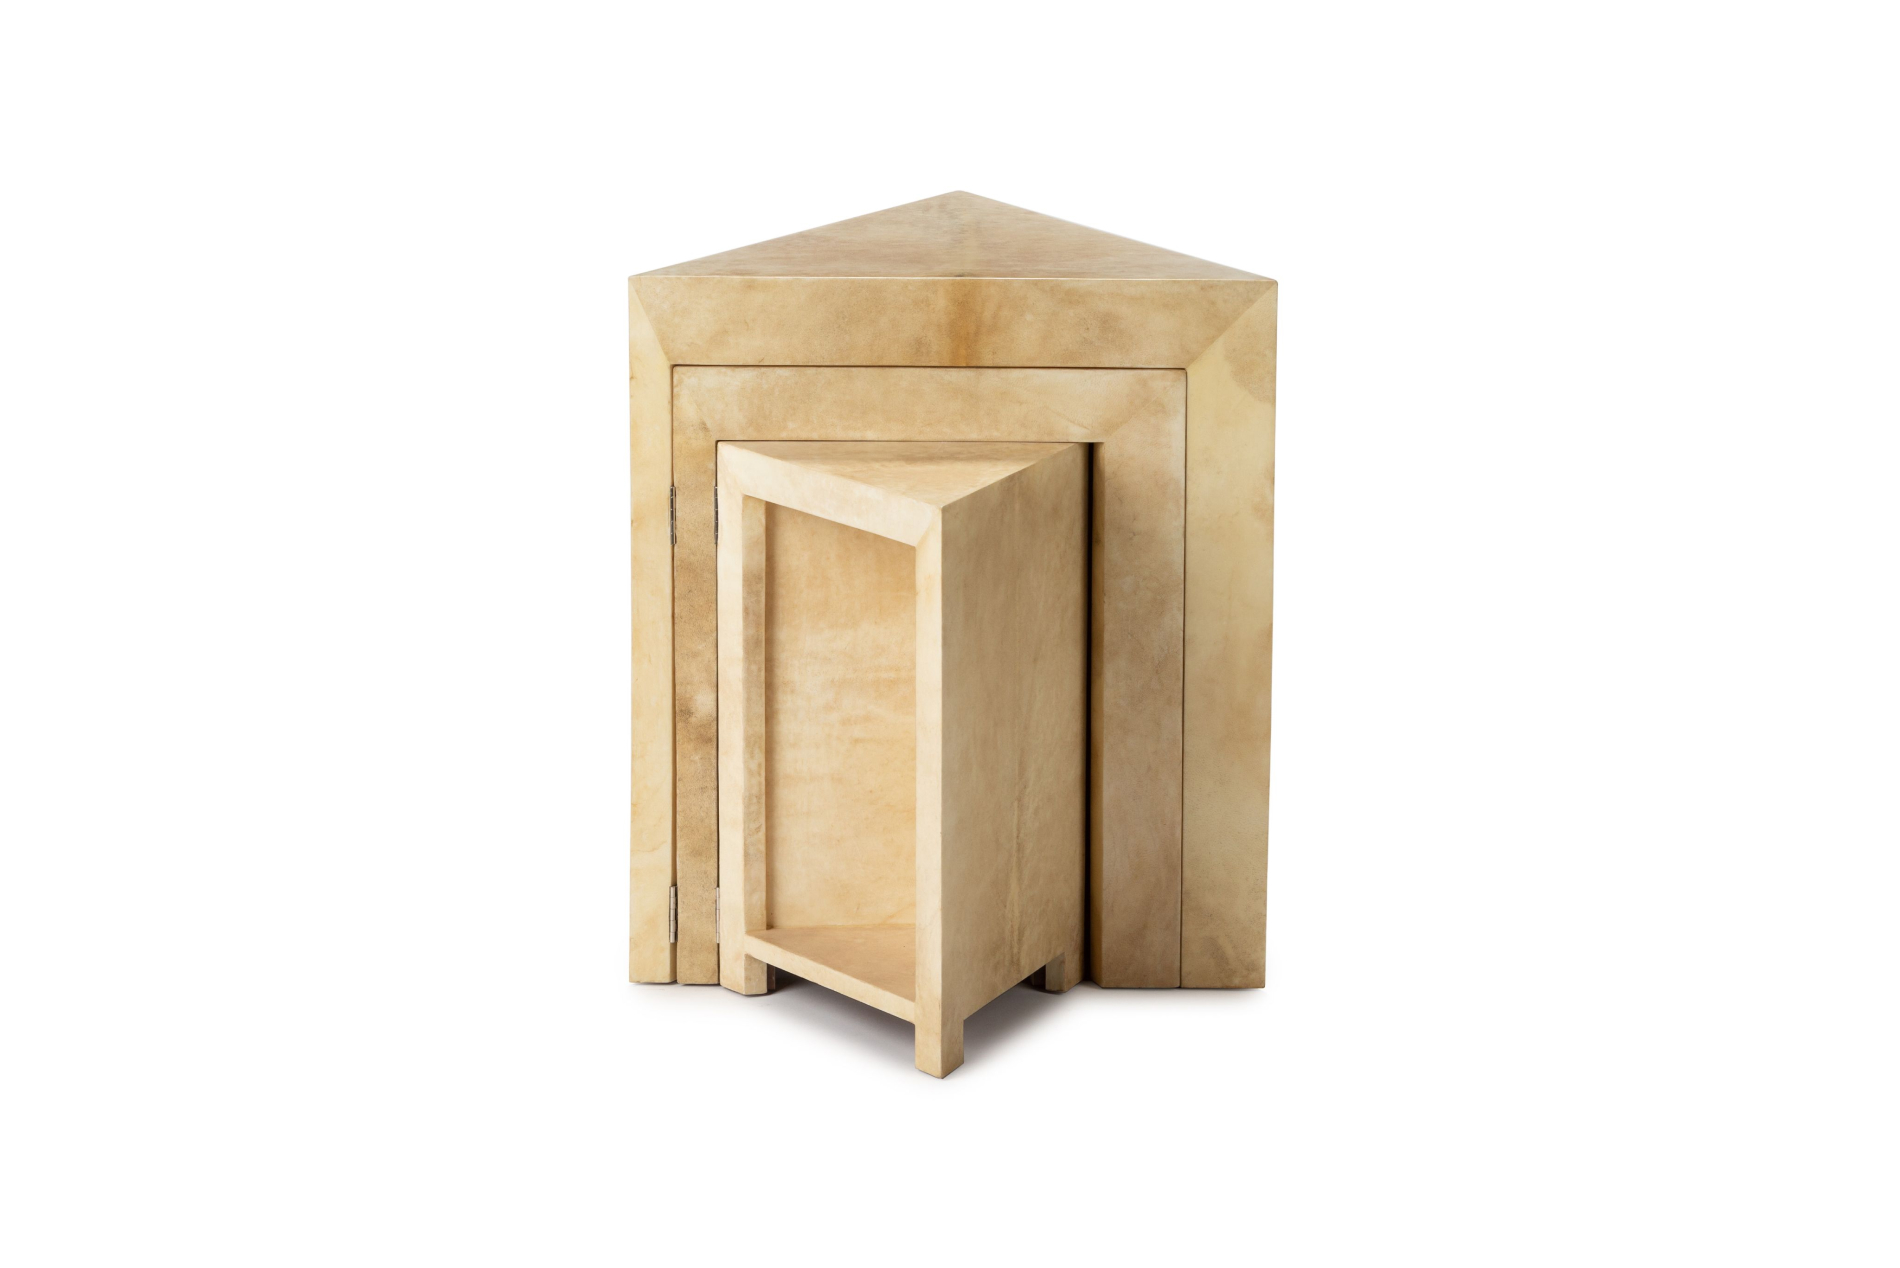 The Triade Nesting Table in Walnut — SOLO by Allan Switzer